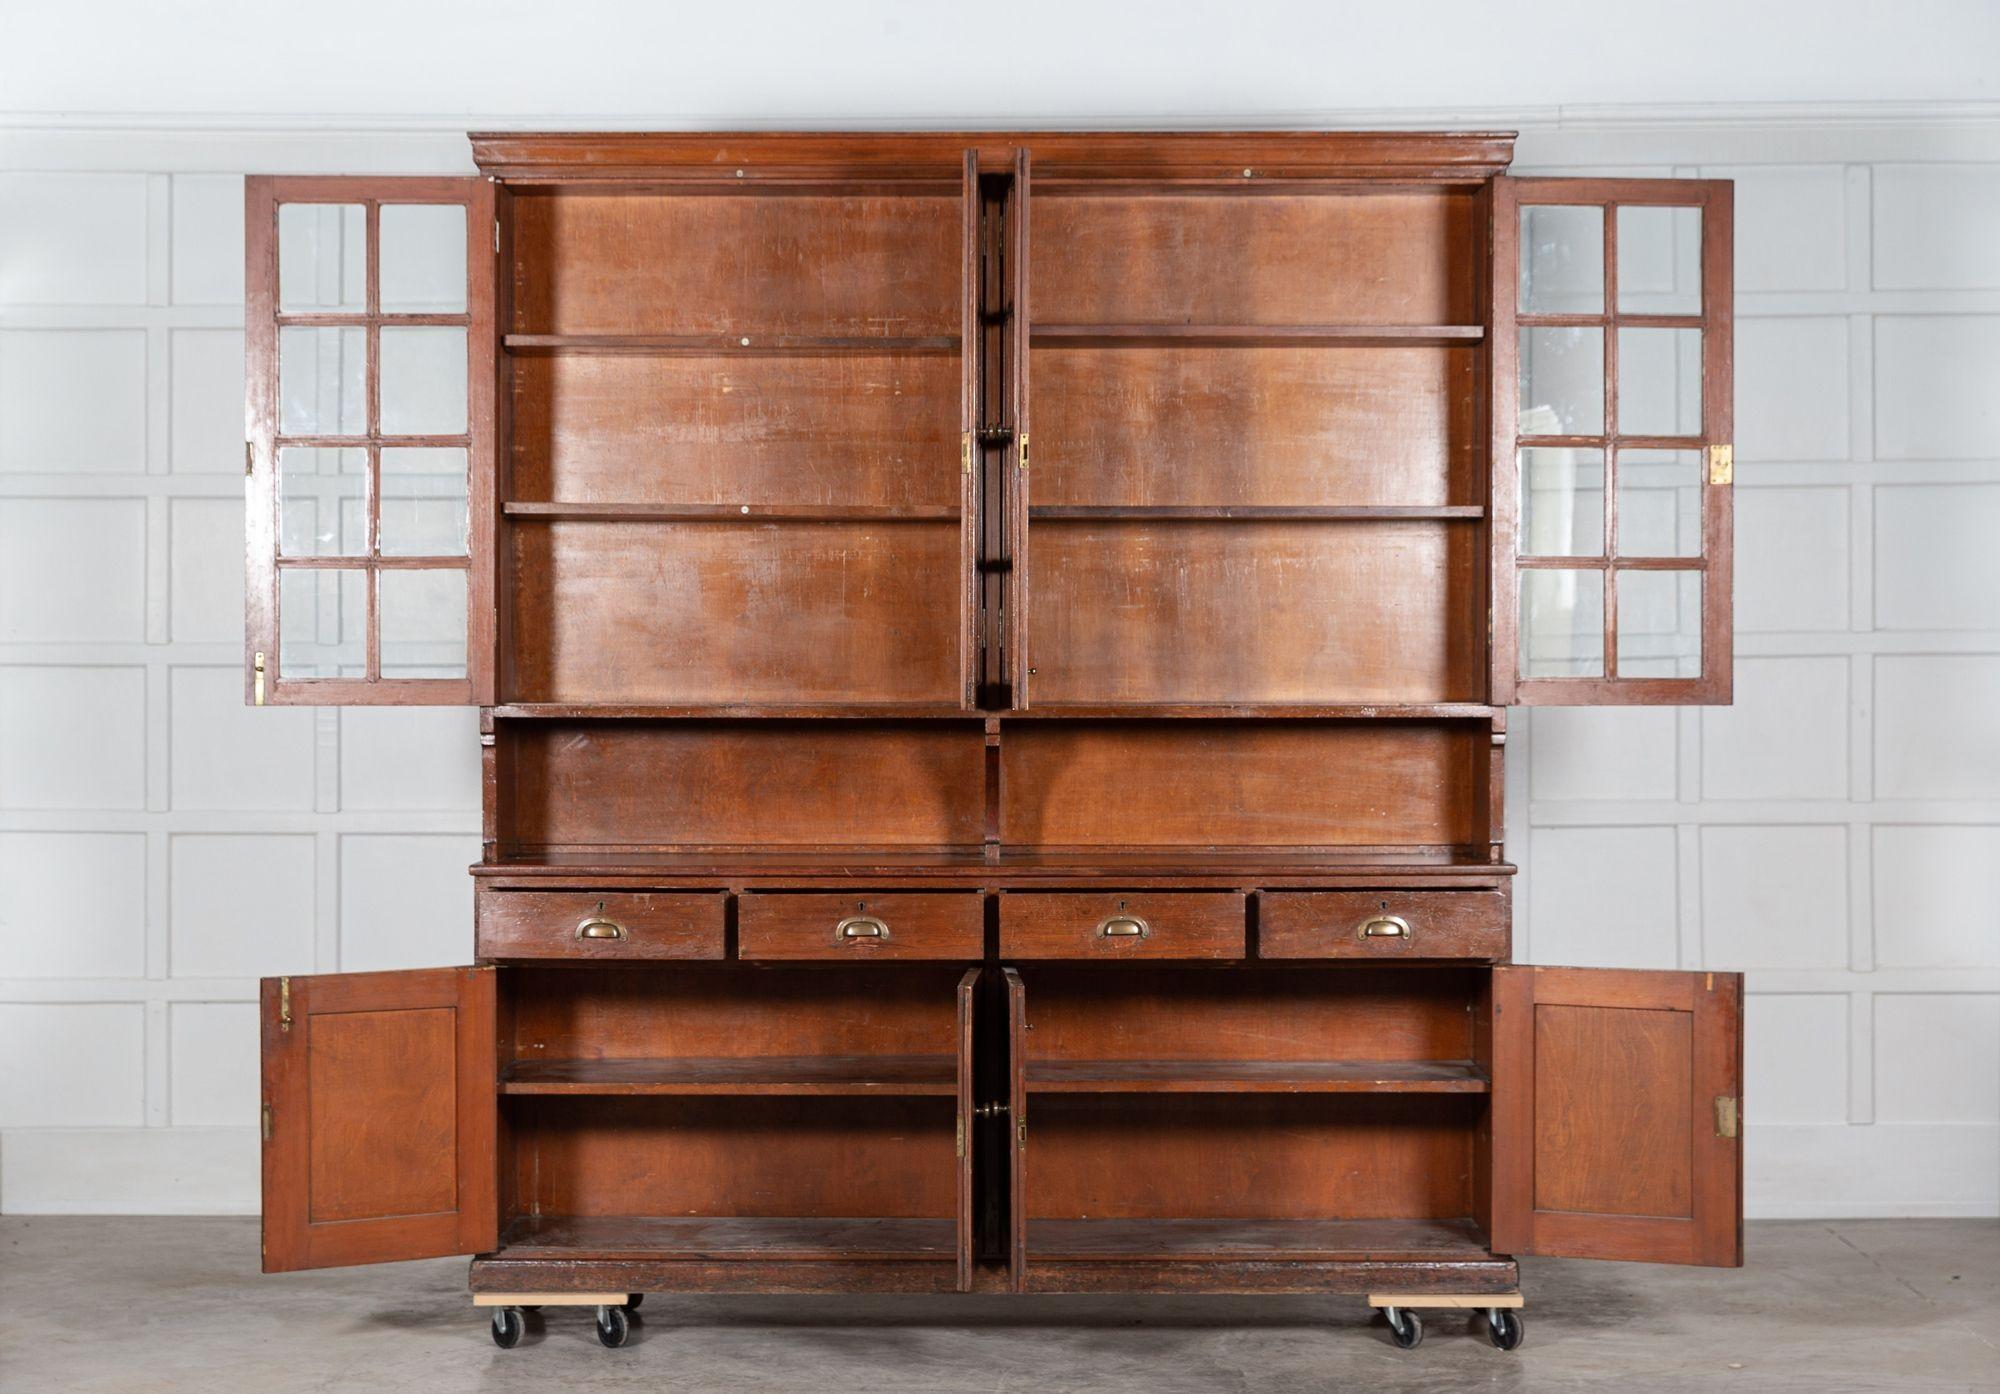 circa 1890
Large Glazed Pine & Oak bookcase / housekeepers cabinet
sku 1295
W206 x D44 x H226 cm
Base W203 x D44 x H84 cm
Top W206 x D37 x H142 cm.